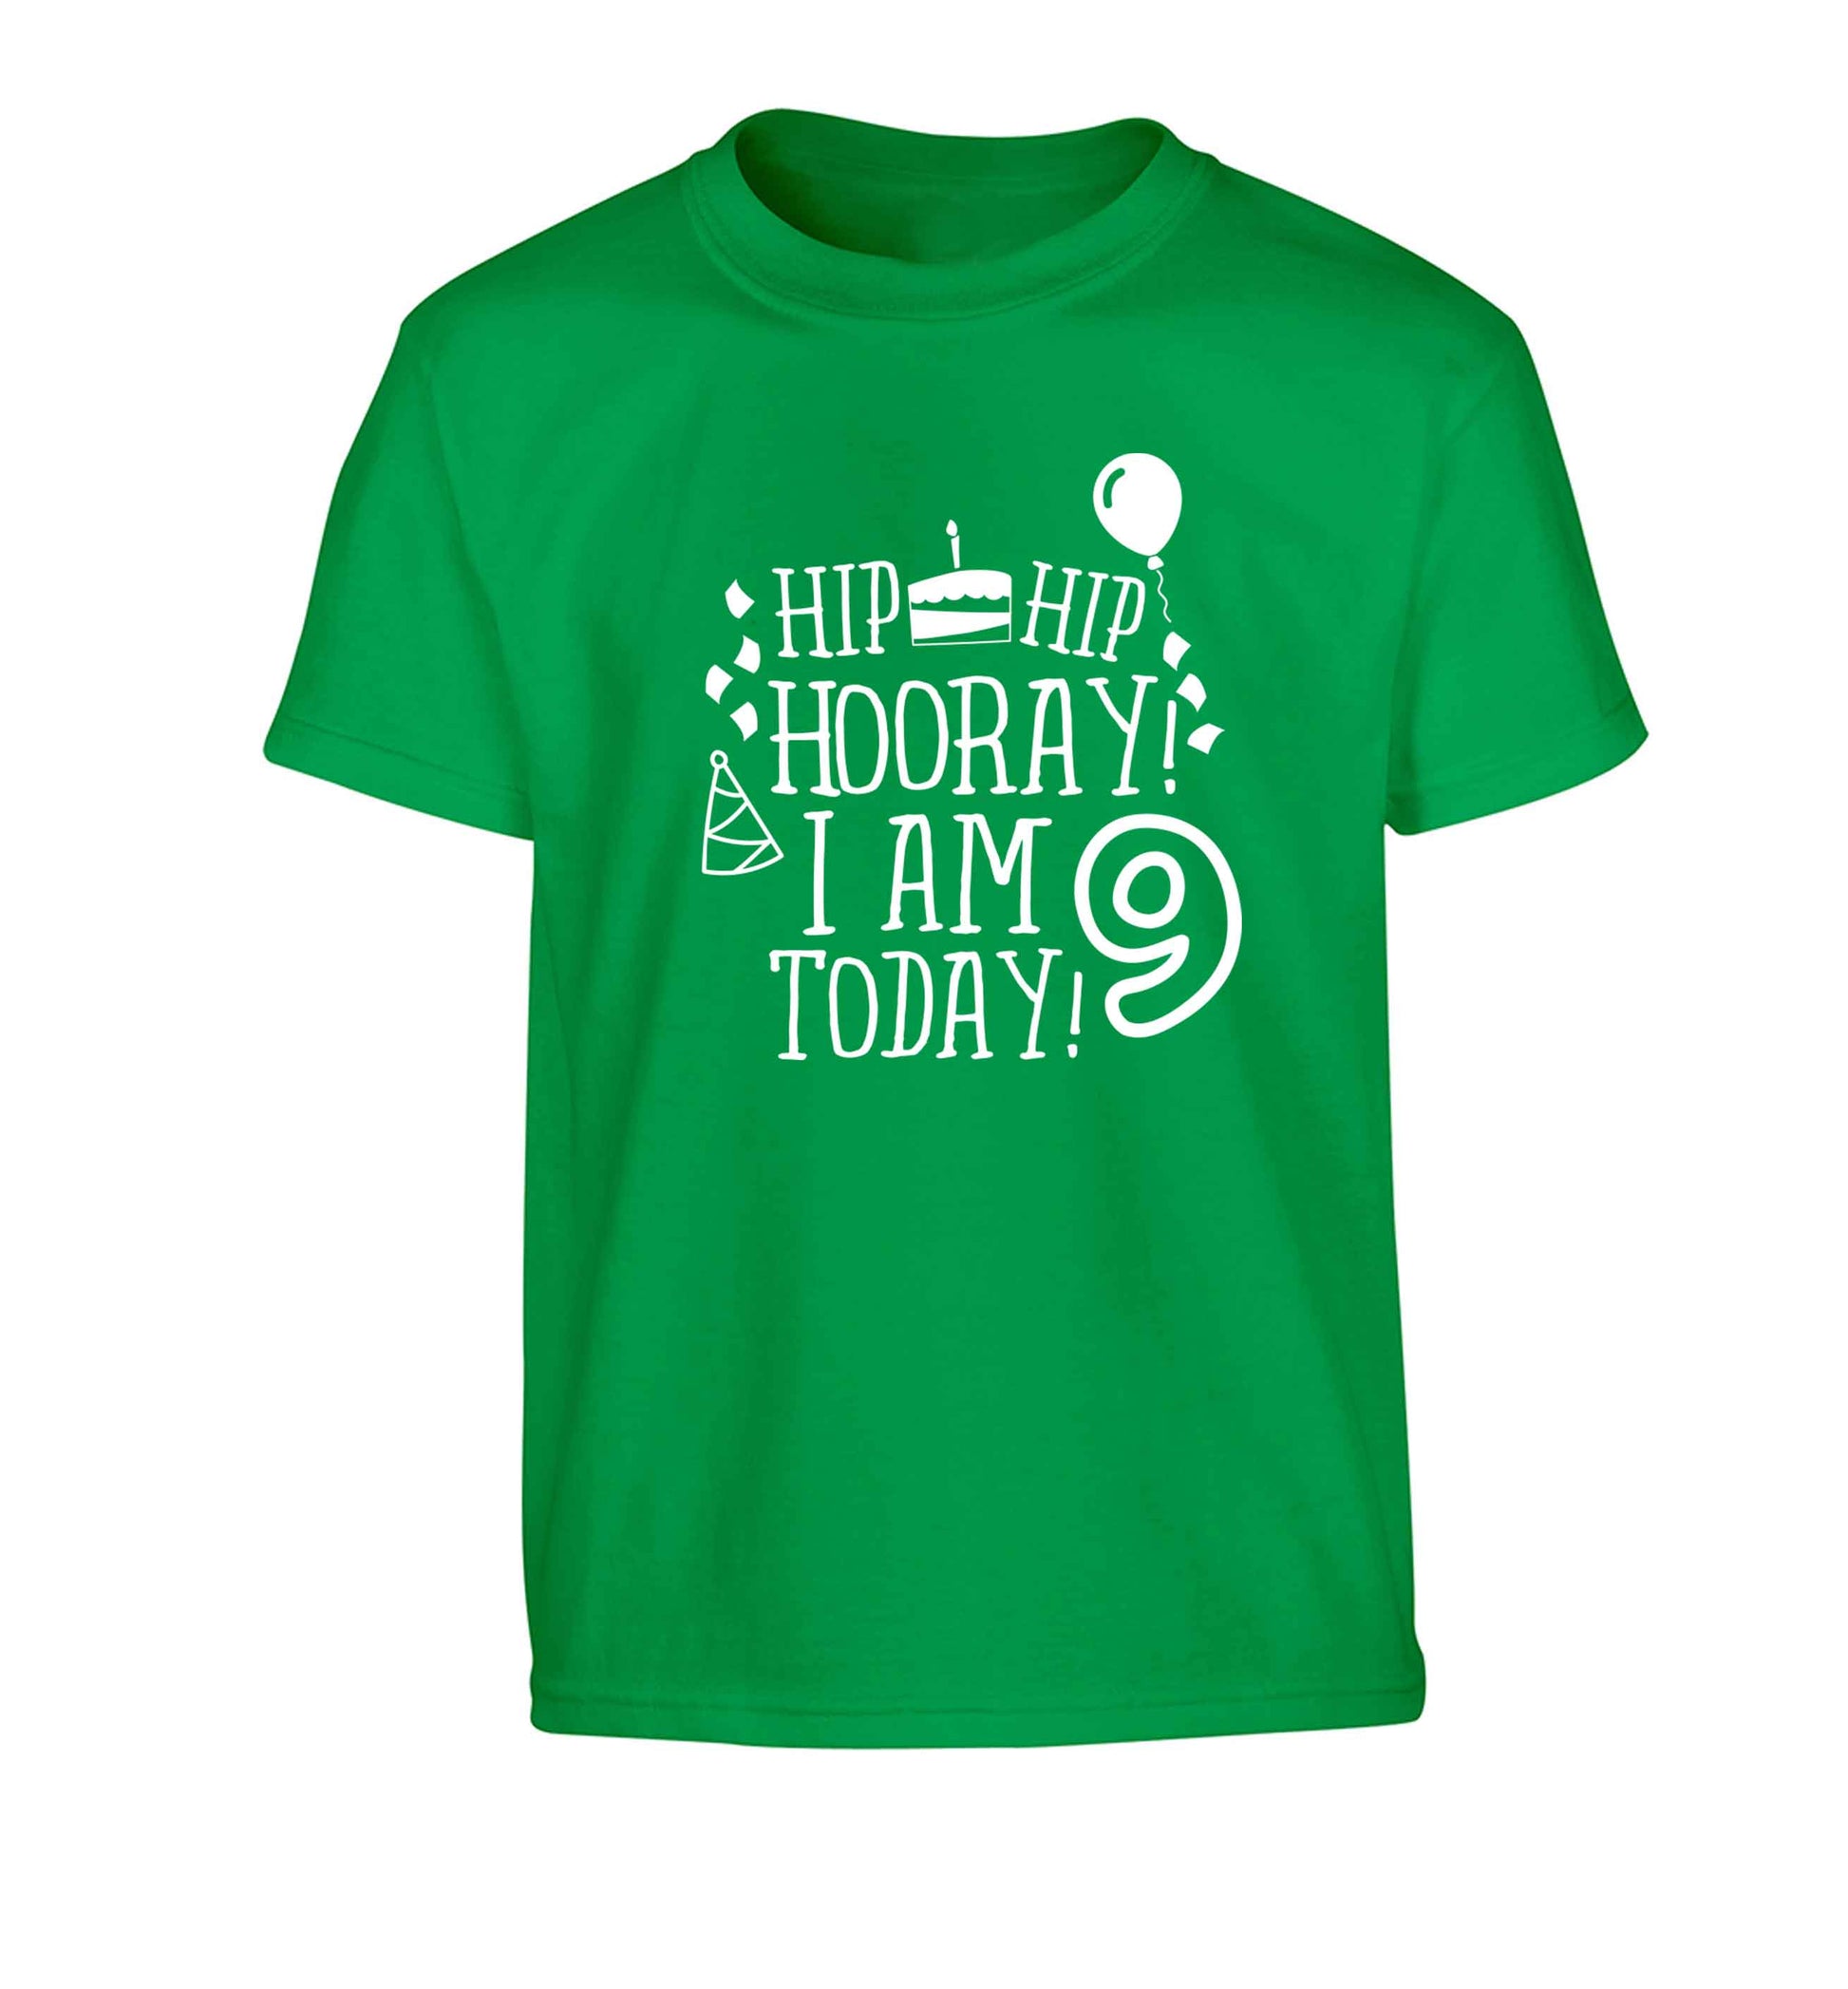 Hip hip hooray I am 9 today! Children's green Tshirt 12-13 Years